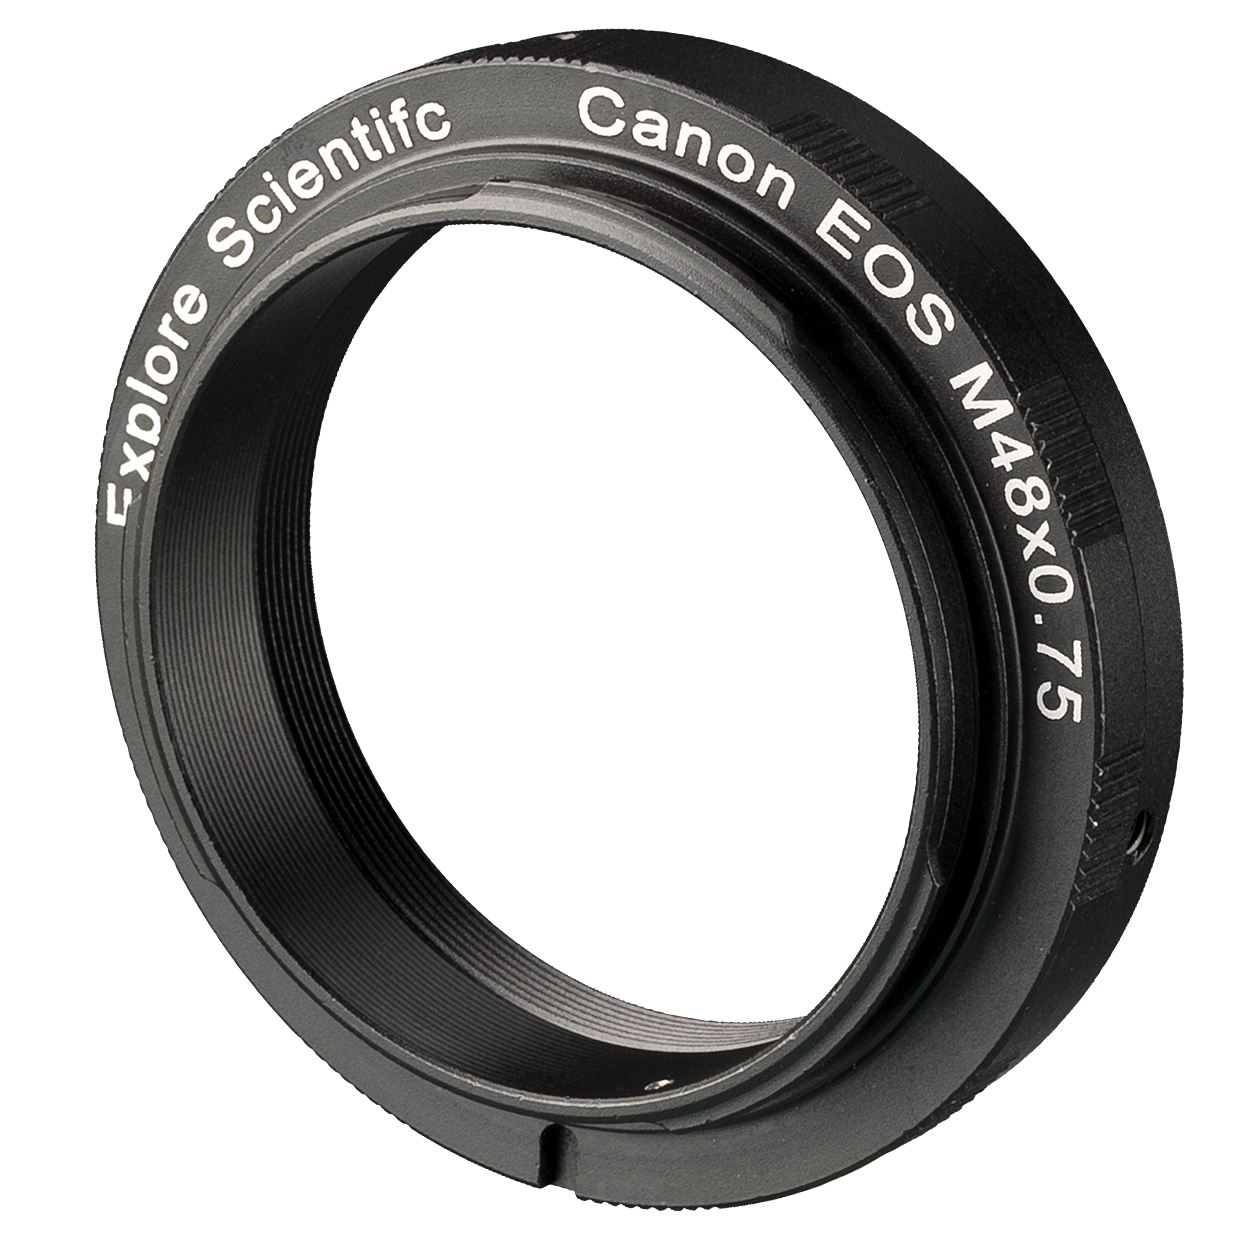 EXPLORE SCIENTIFIC Kamera-Ring M48x0.75 für Canon EOS